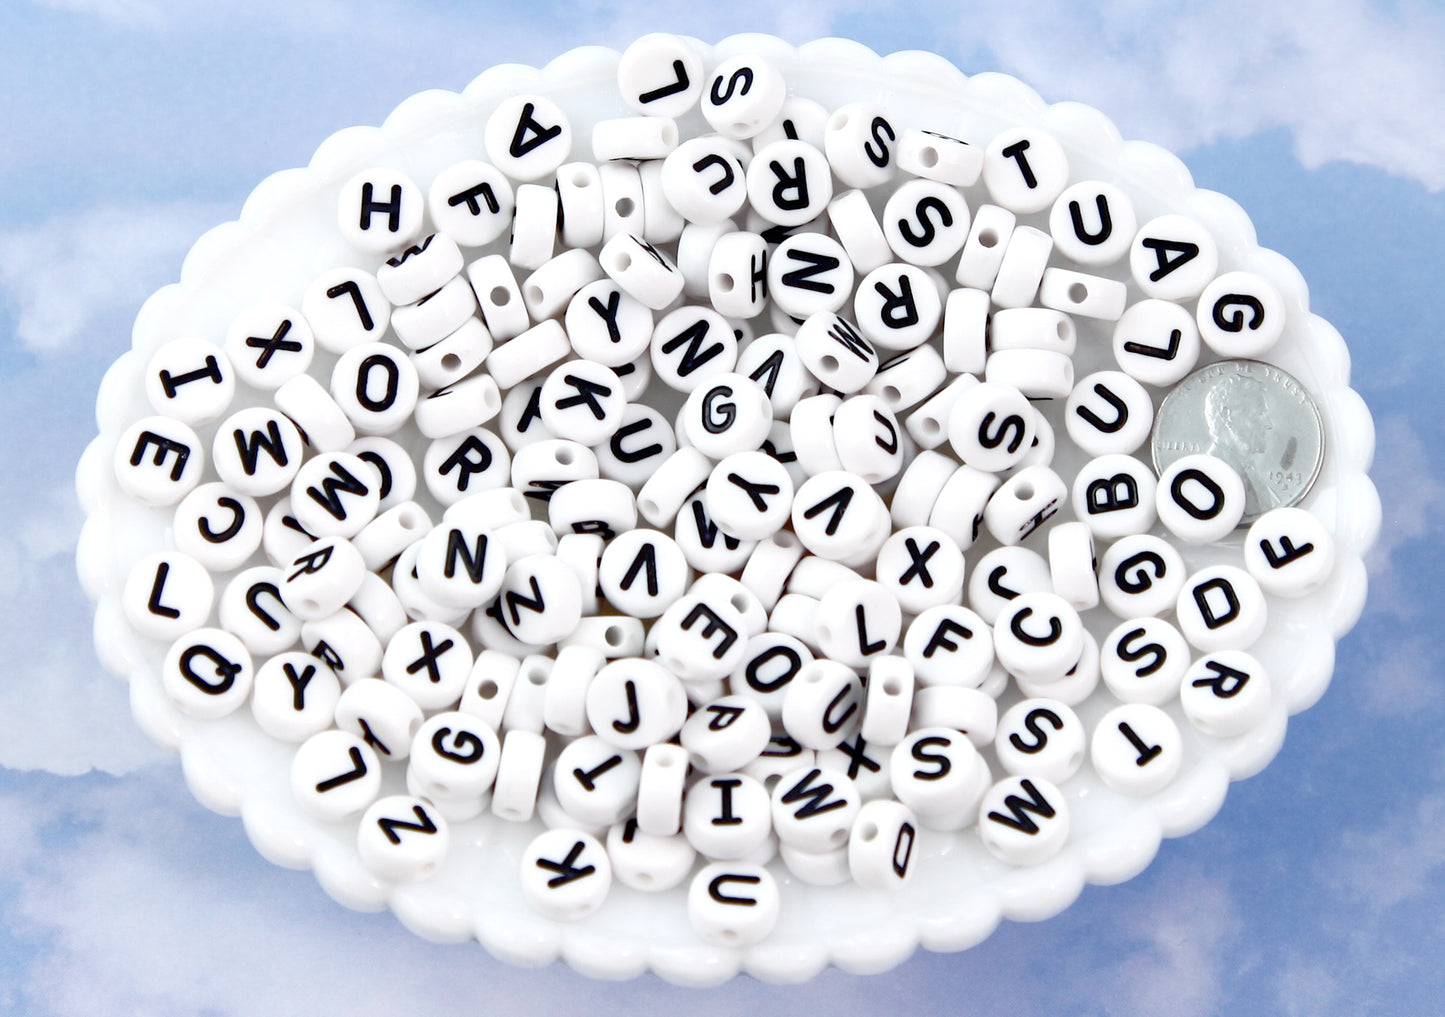 Big Letter Beads - 10mm Large Round White Alphabet Acrylic or Resin Beads - 170 pc set